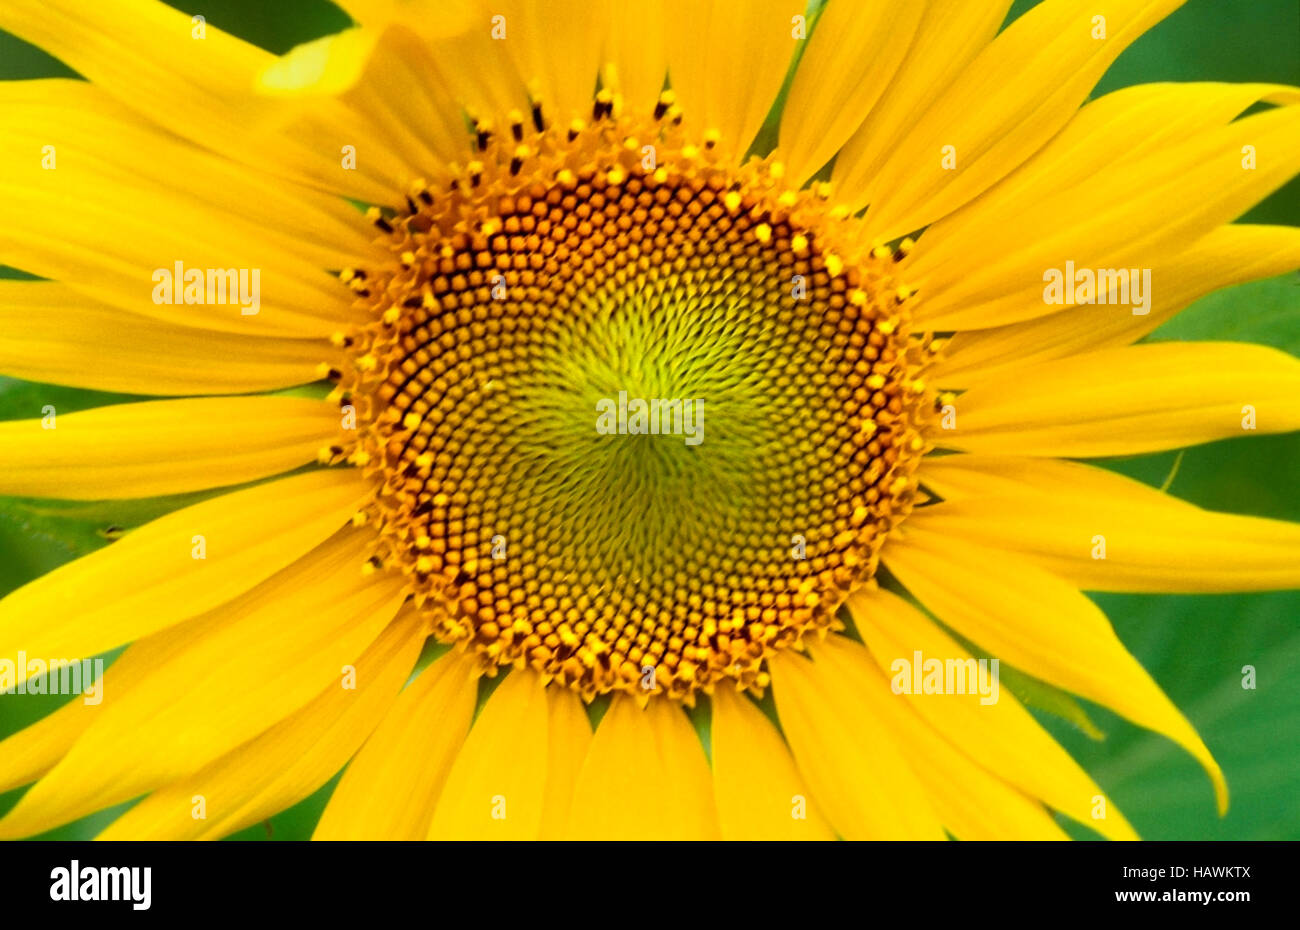 Helianthus or sunflower Stock Photo